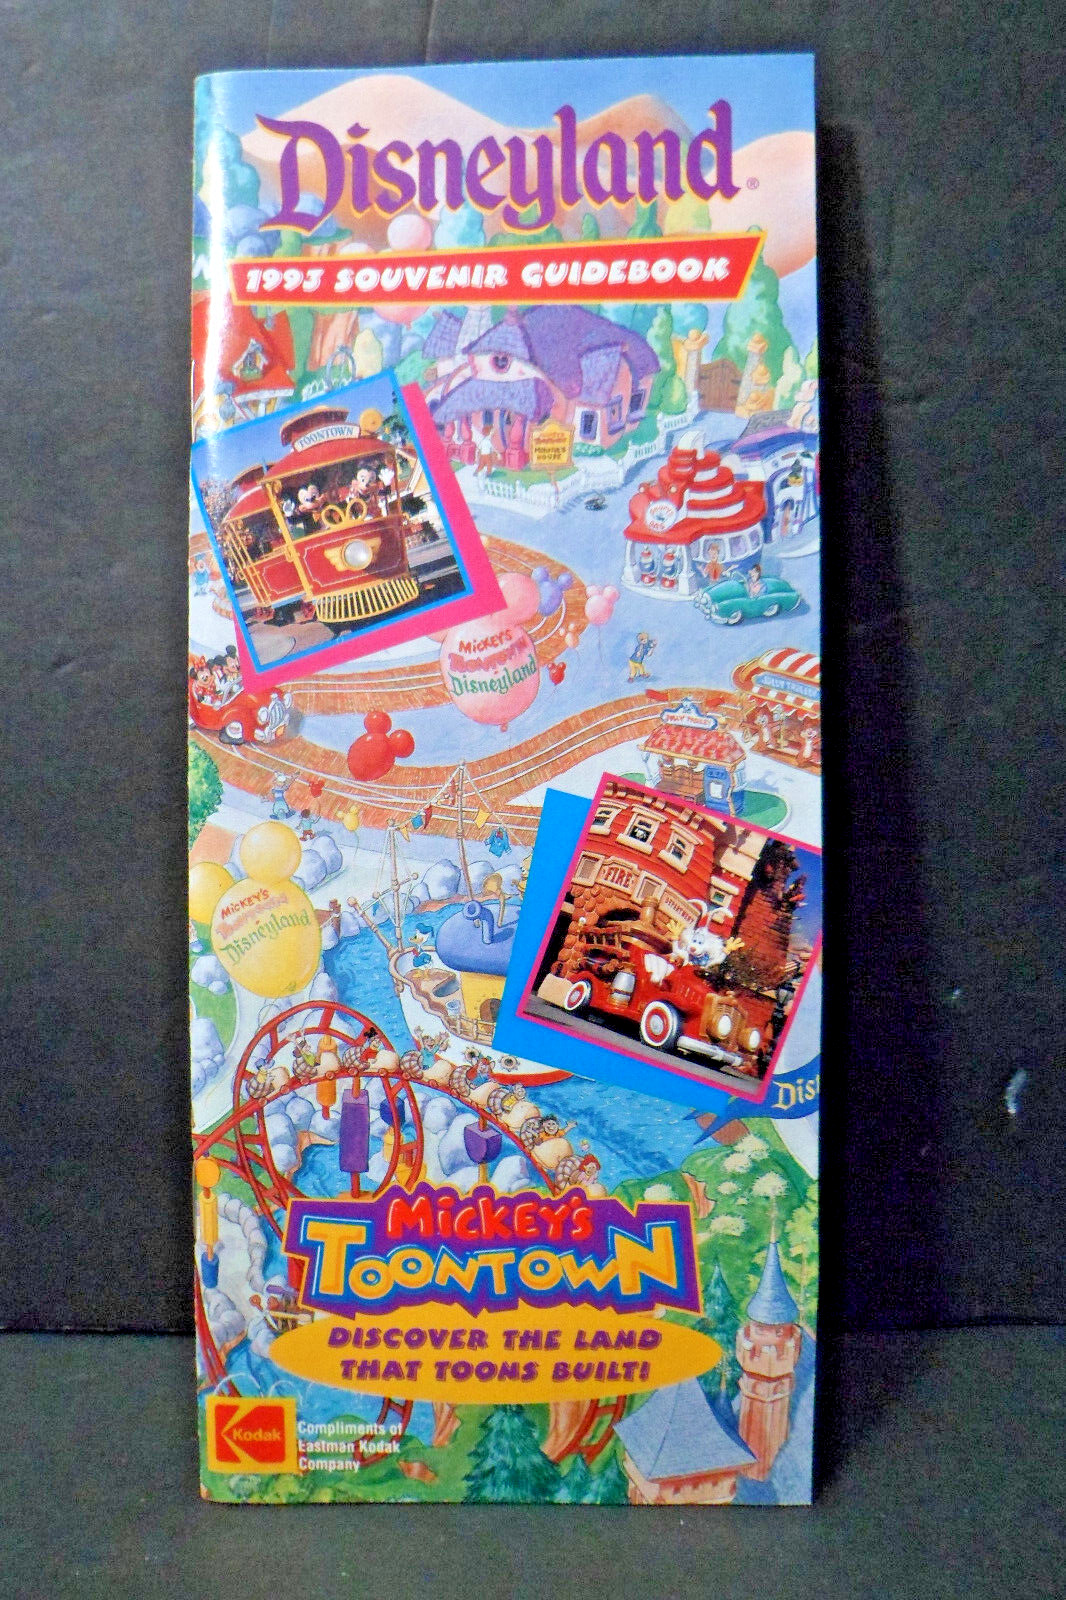 Disneyland 1993 Souvenir Guidebook - Mickey's Toowntown Opening Days - New